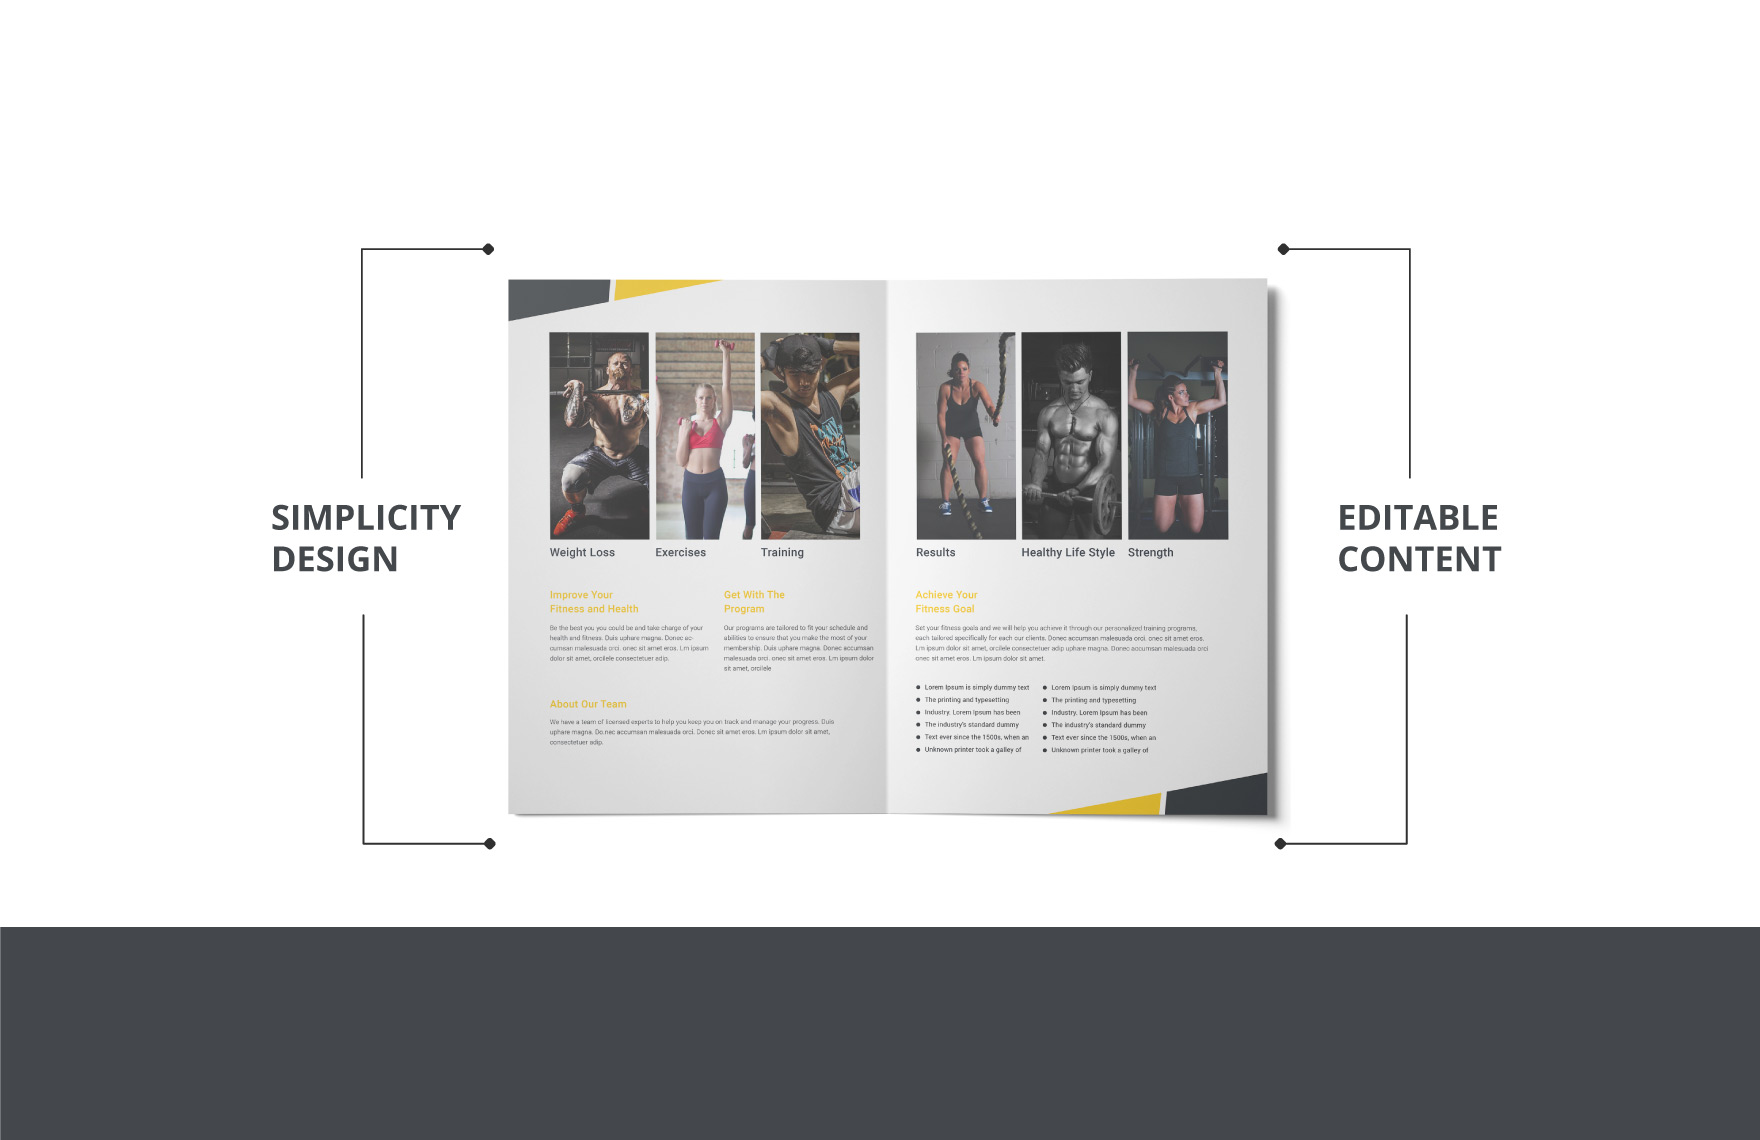 Gym Bi-Fold Brochure Template